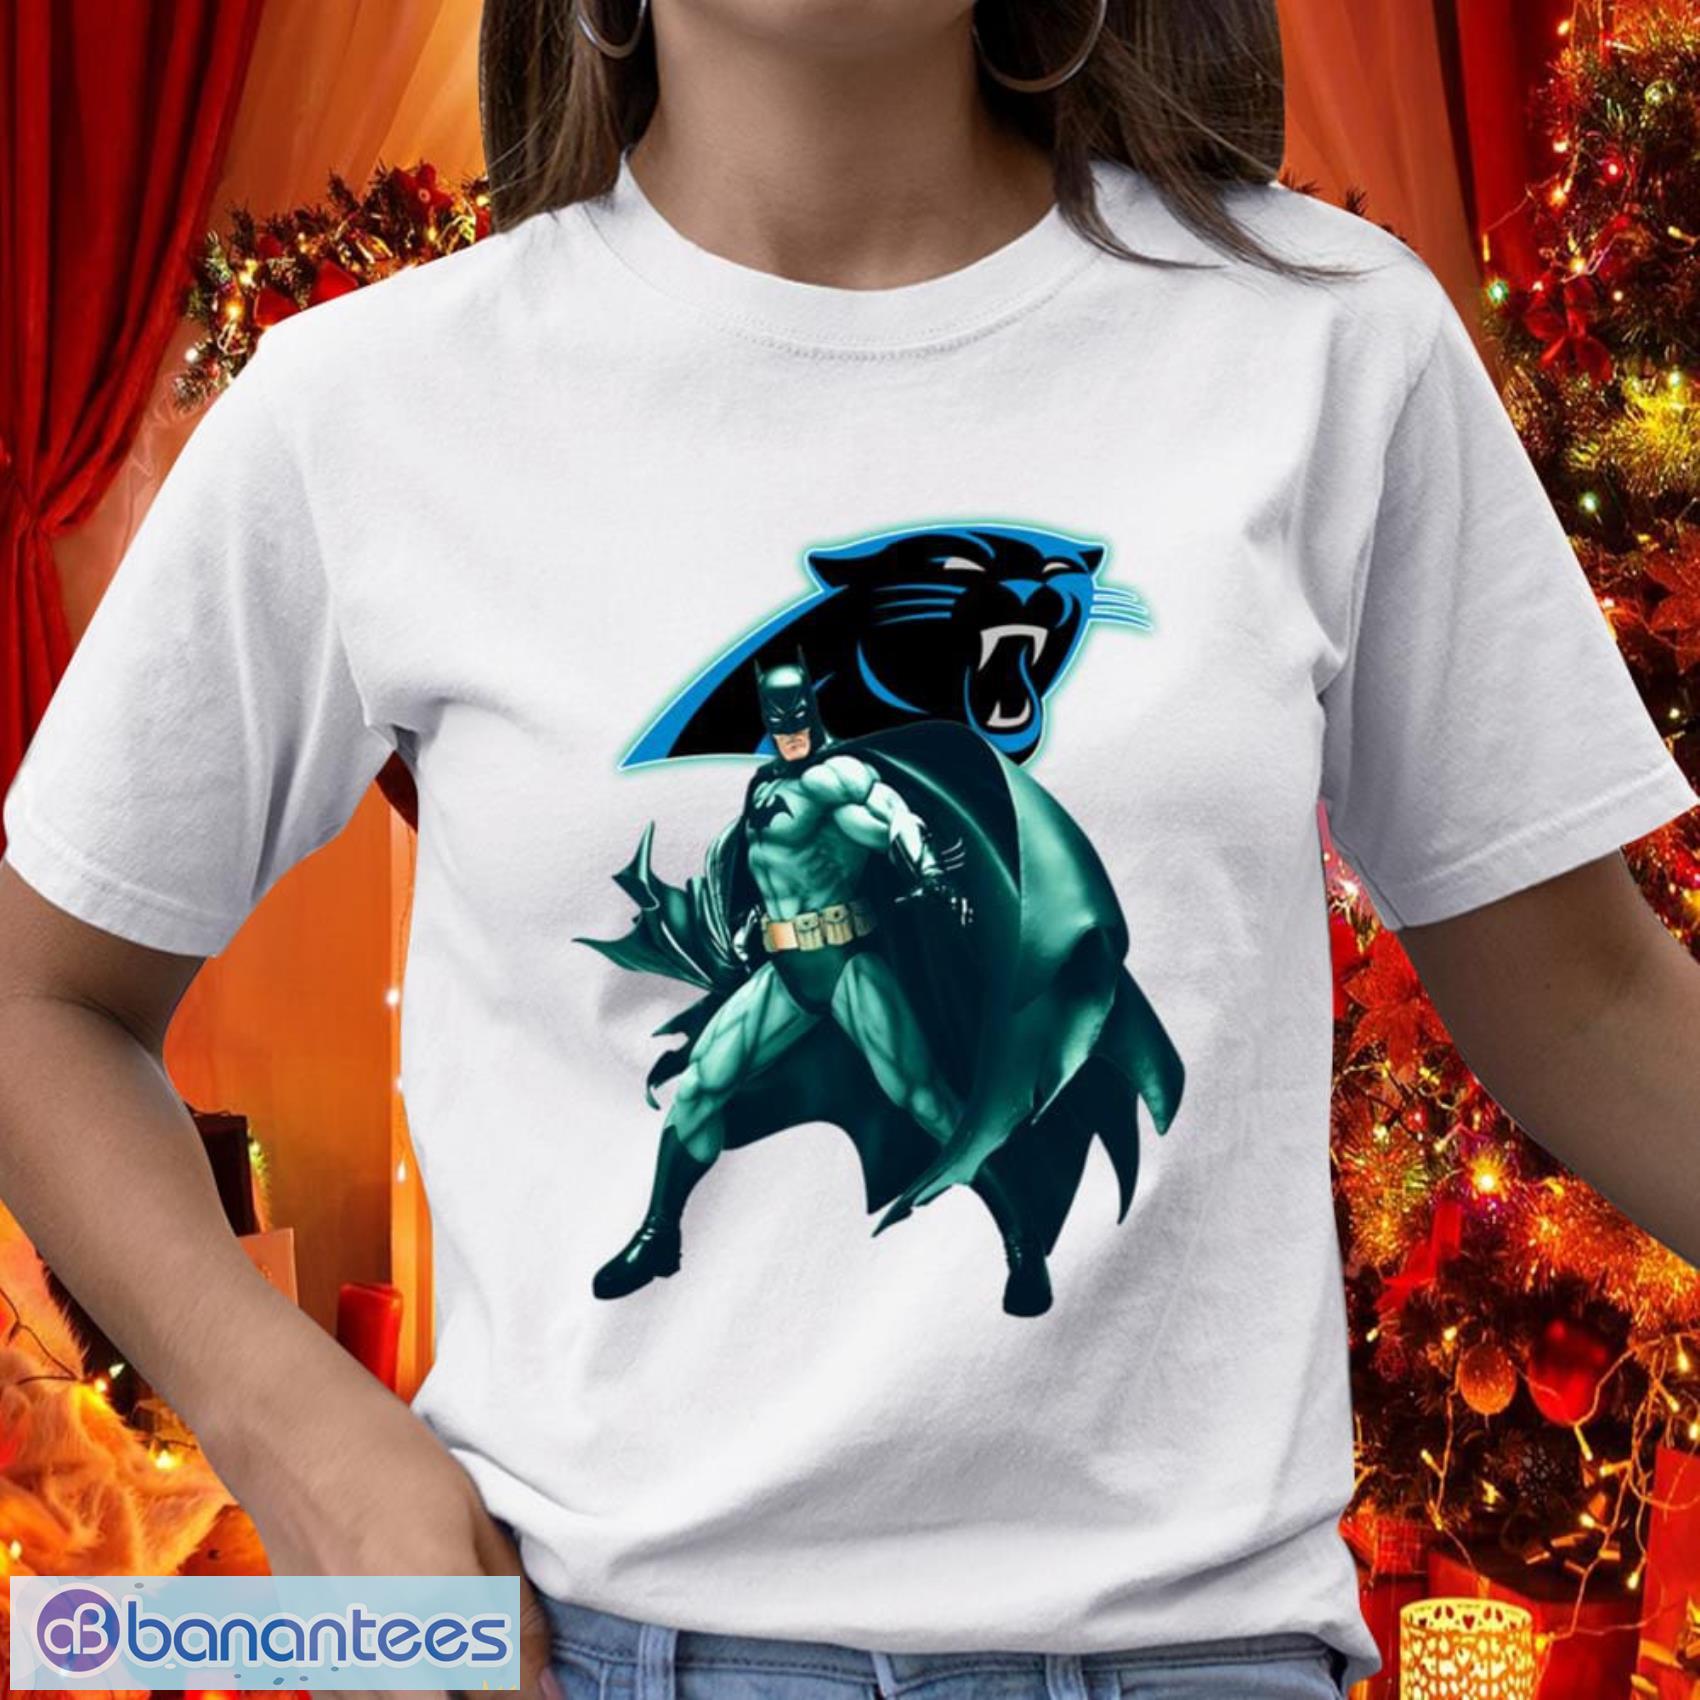 Carolina-Panthers Batman Dc T Shirt Gift For Sport Team's Fans - Carolina-Panthers Batman Dc T Shirt_1